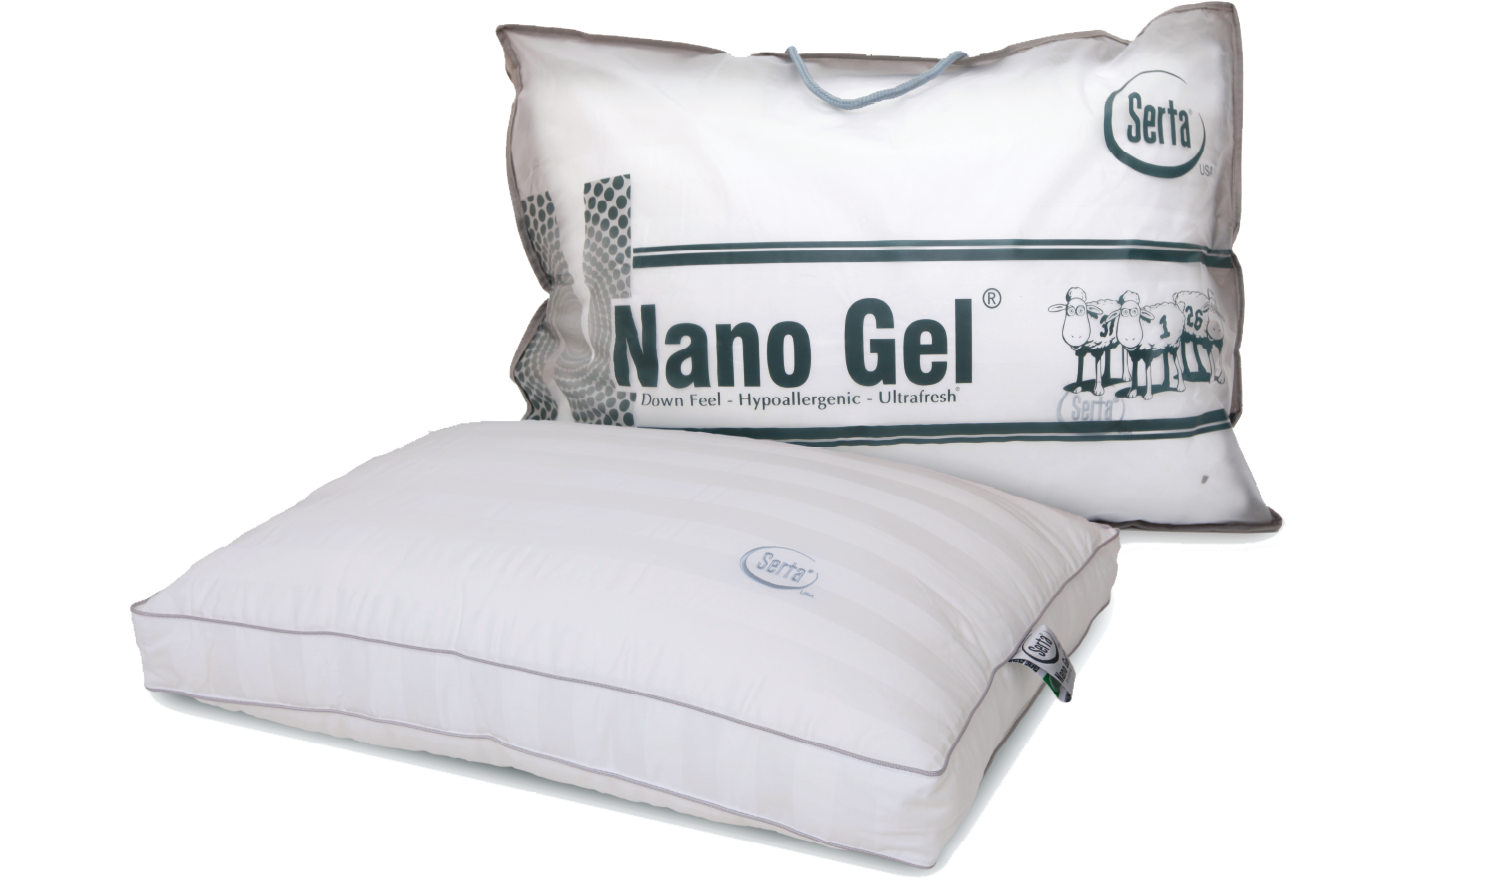 Nano gel. Micro Gel подушка. Fiberball подушки. Декоративная промо подушка serta. Подушка из нано серебра.